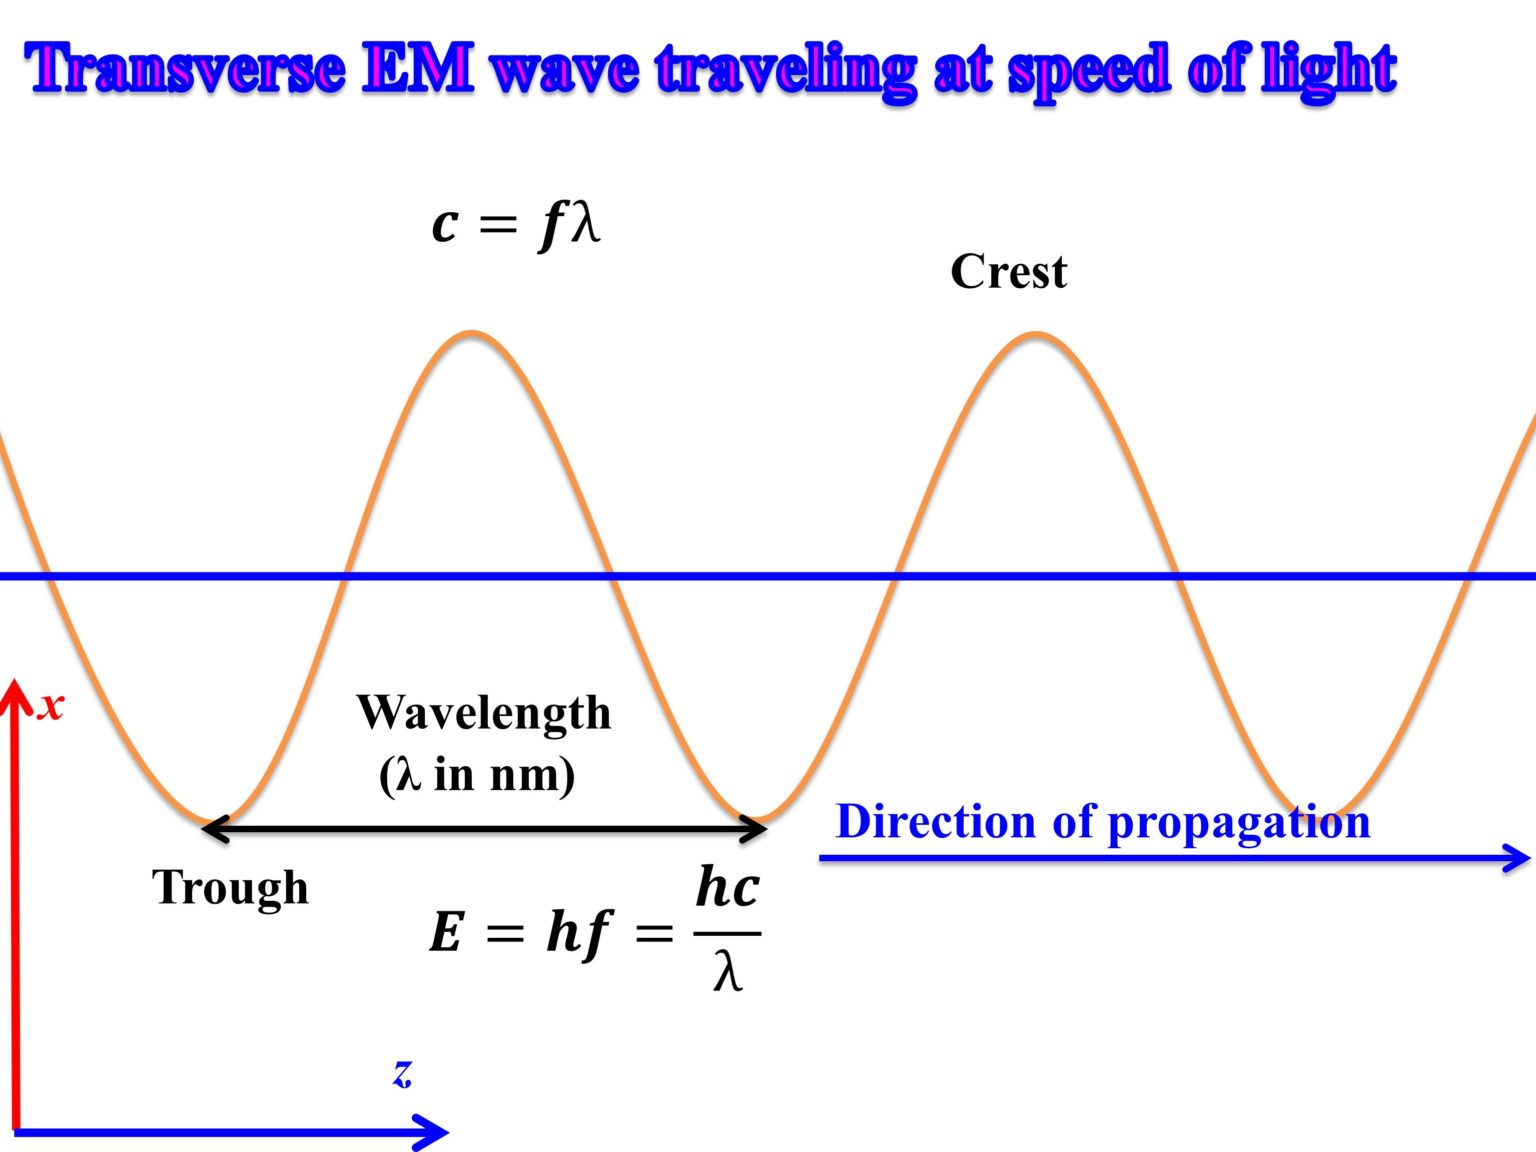 intensity light power equation